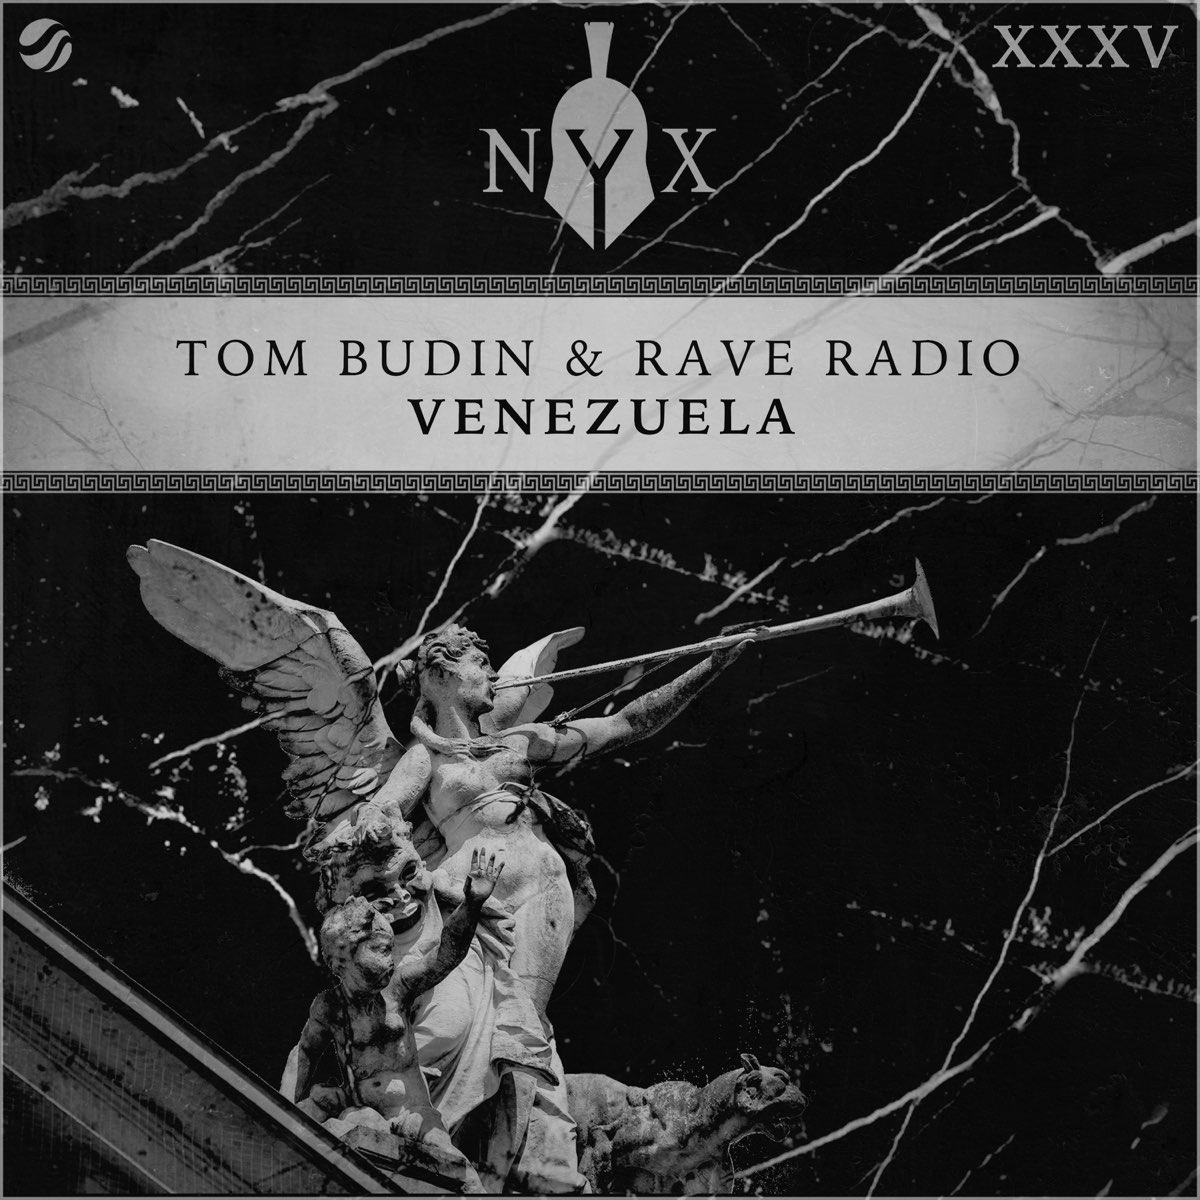 Venezuela - Single by Tom Budin & Rave Radio on Apple Music